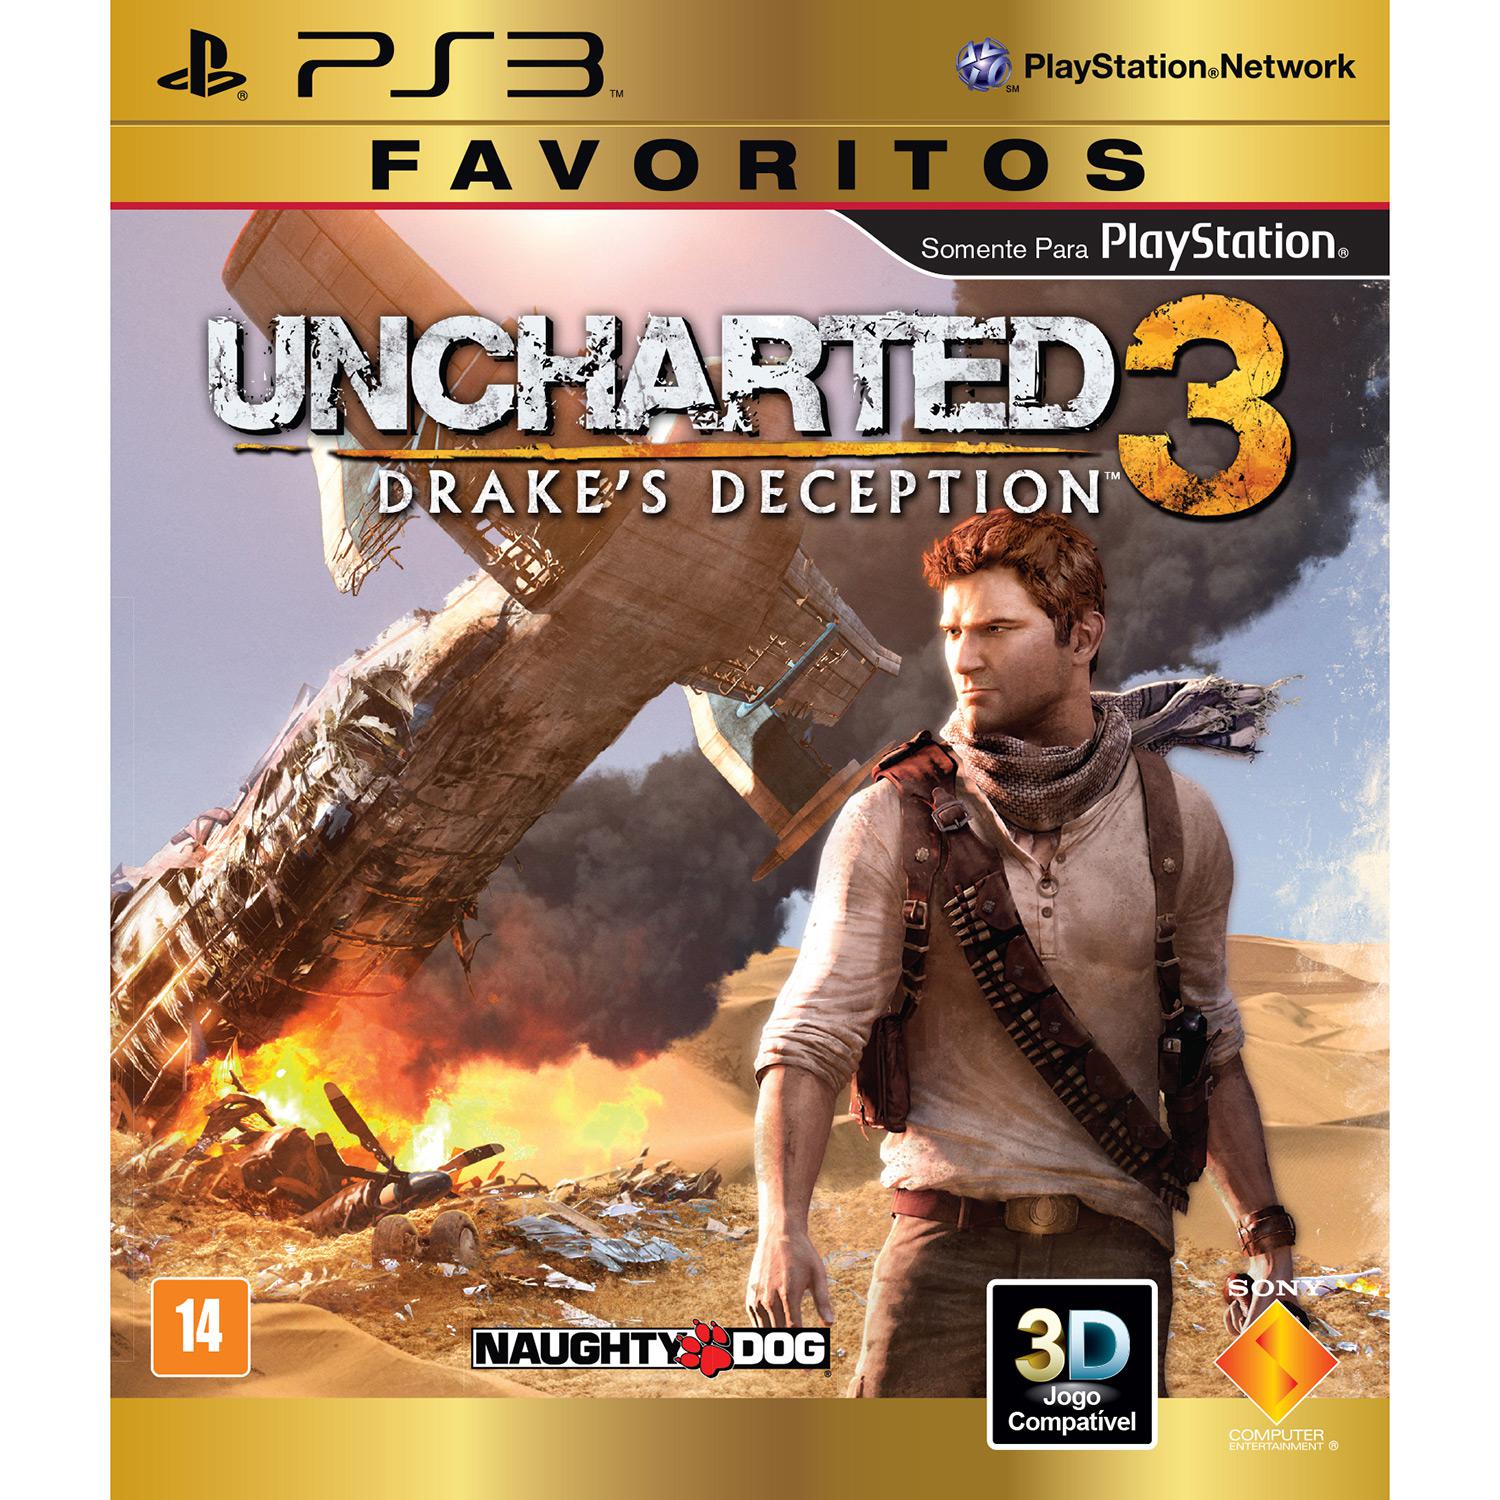 Game Uncharted 3: Drake's Deception - Favoritos - PS3 é bom? Vale a pena?